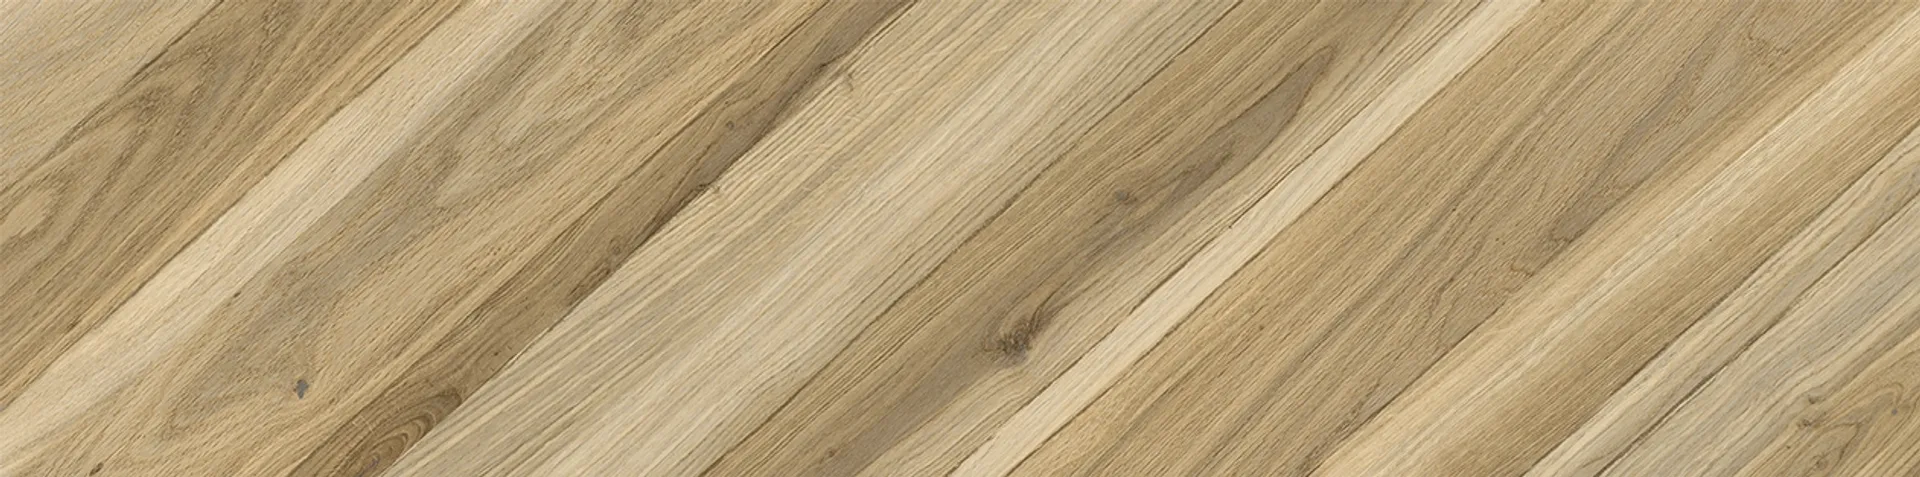 Gres Carrara Chic wood Chevron b mat rectified 22,1x89 Opoczno